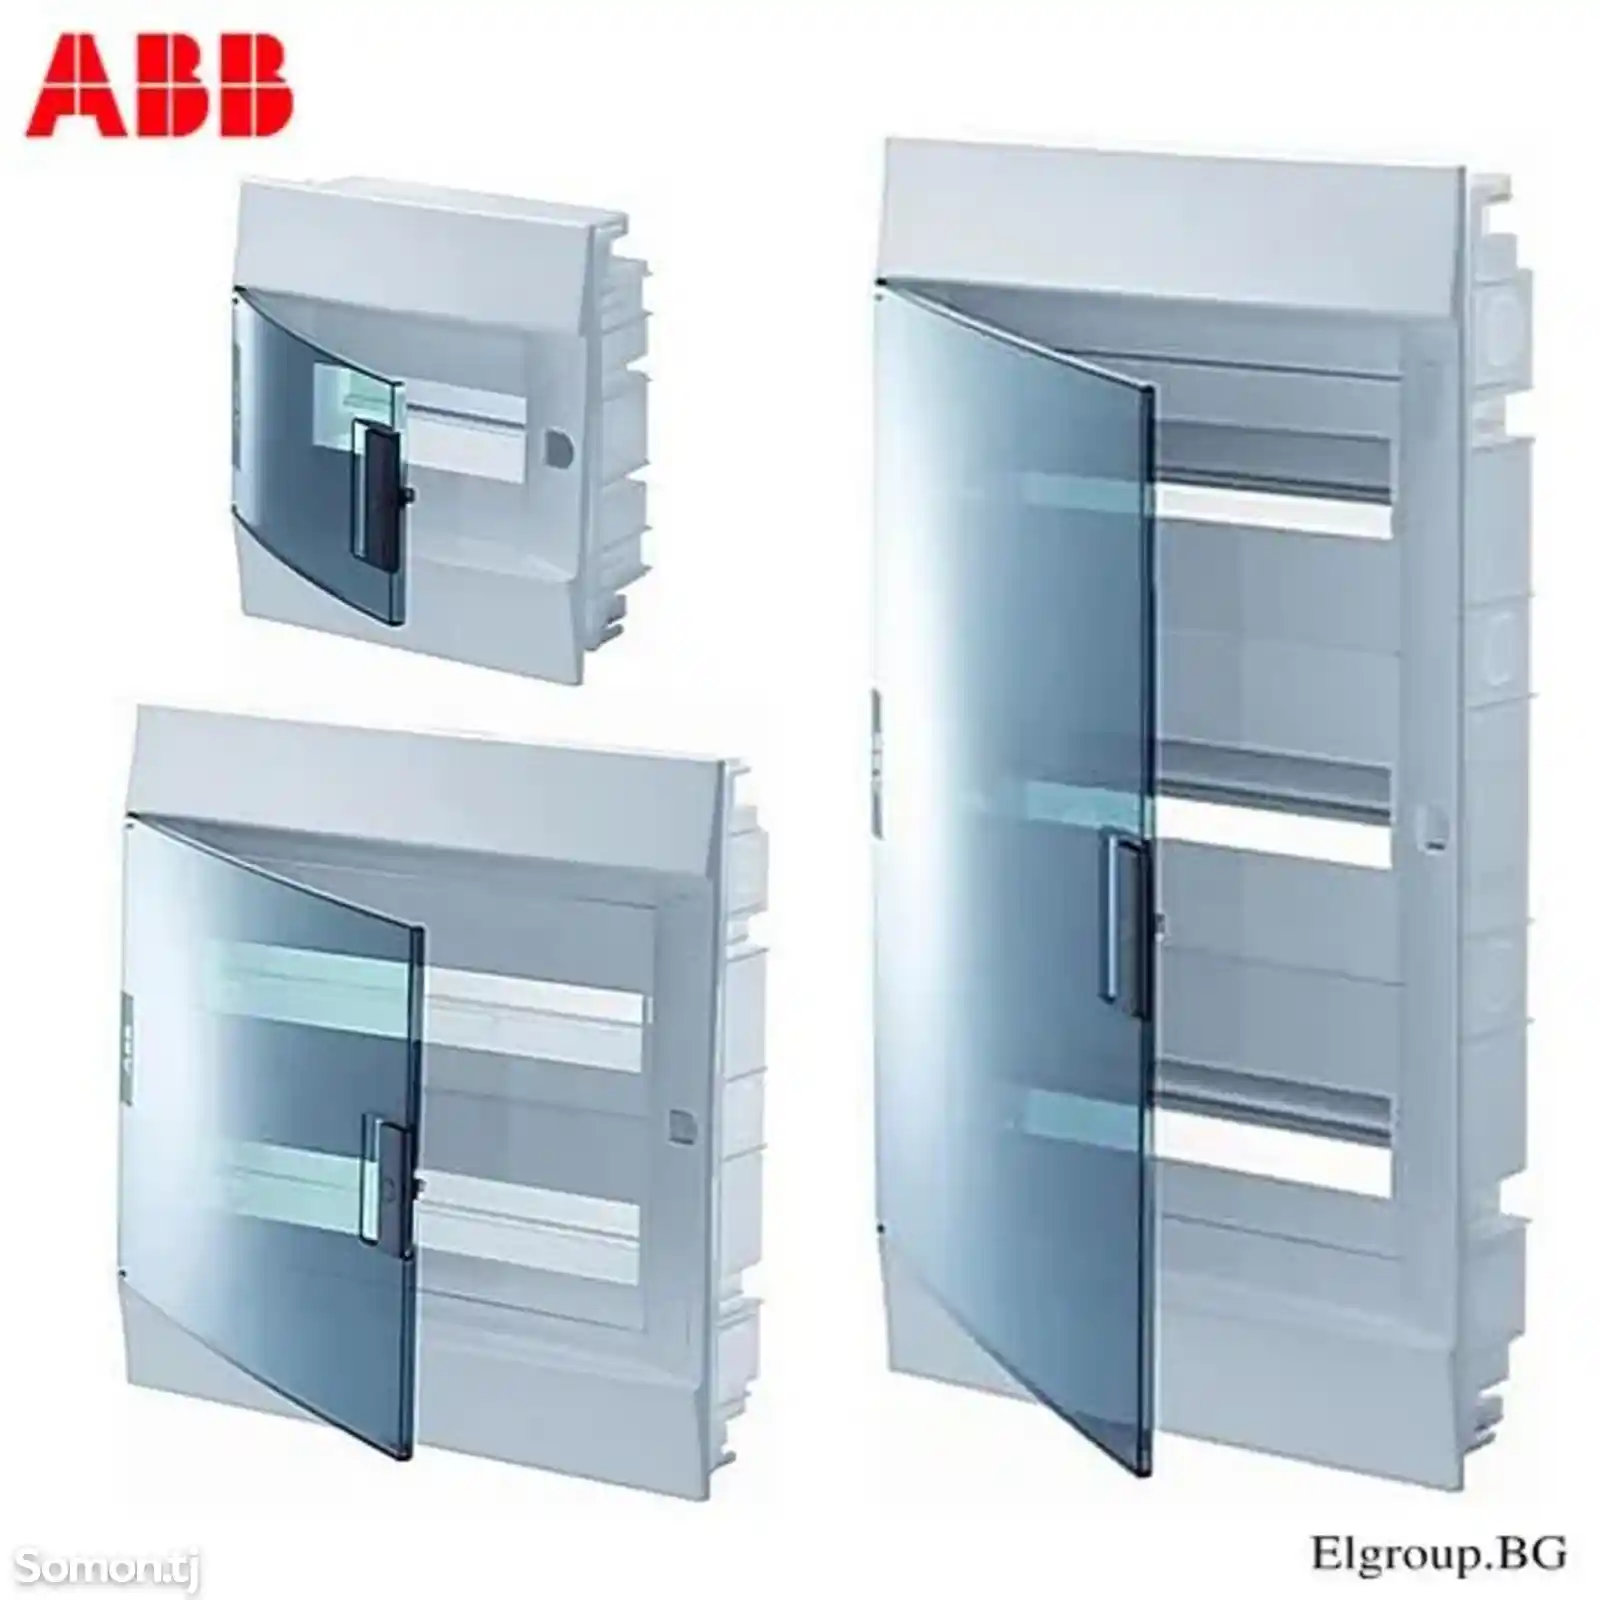 Щит ABB Basic E для скрытого монтажа, прозрачная серая дверь, 24 модул-1